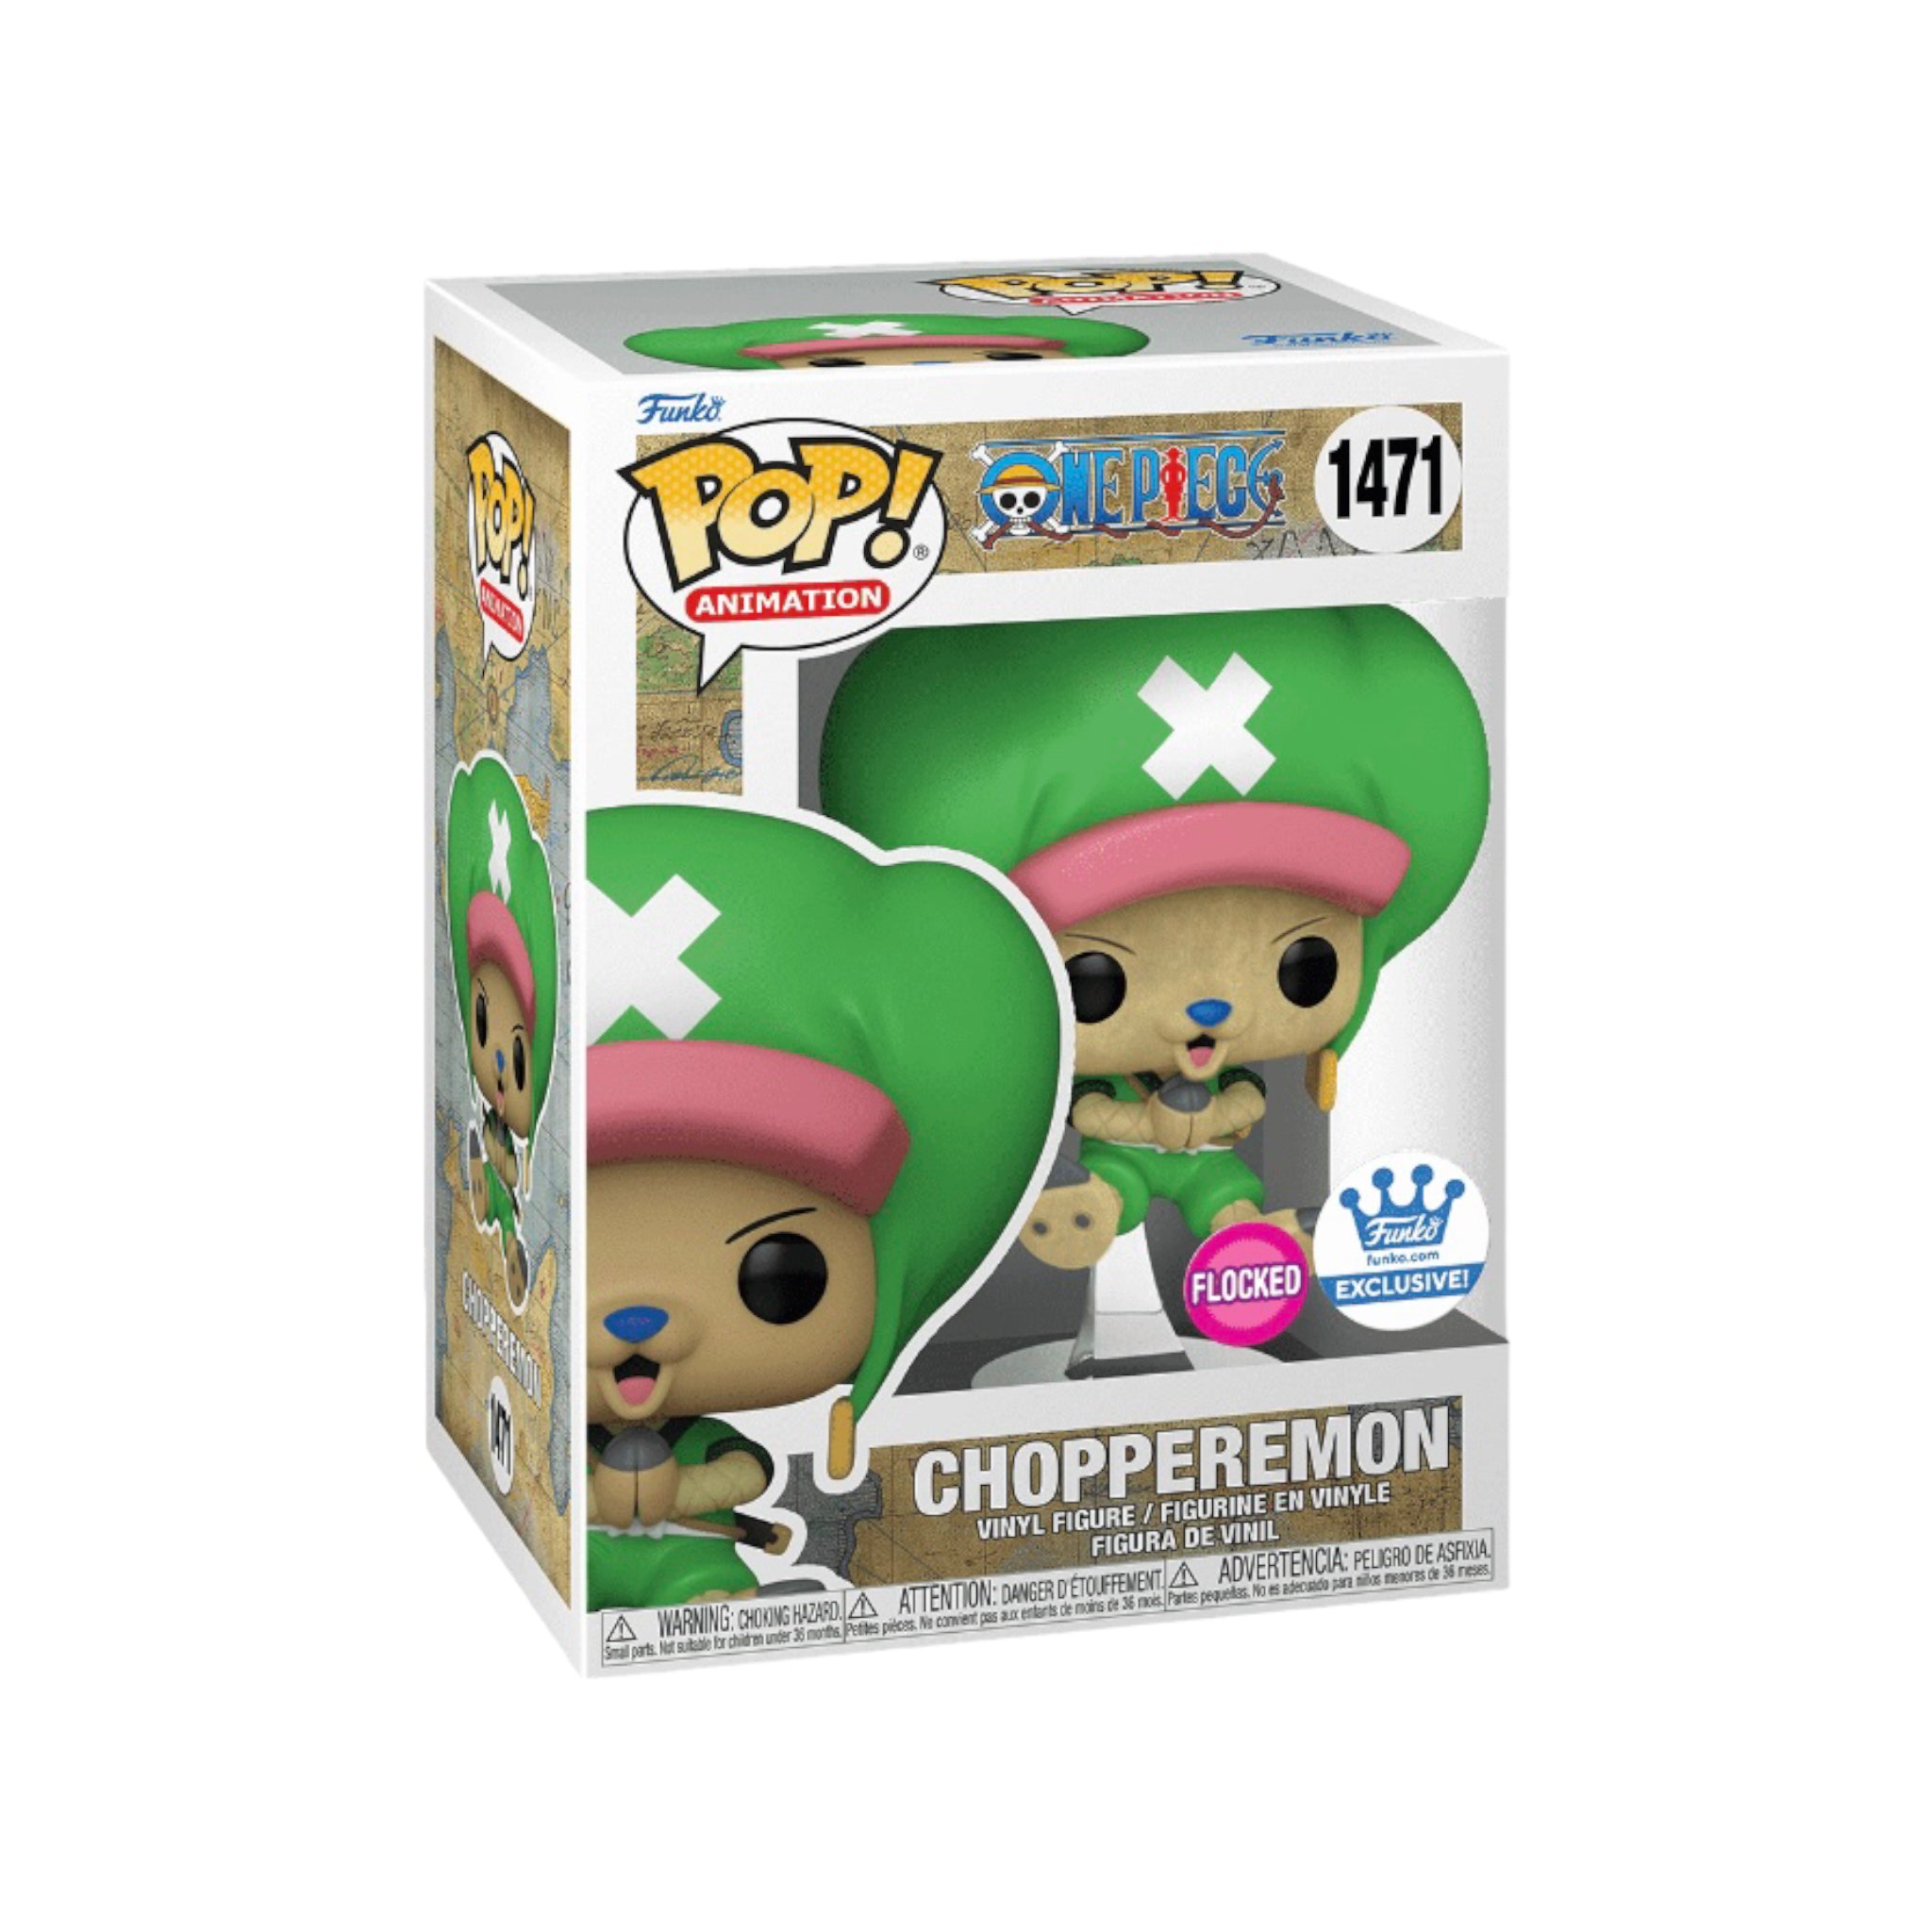 Chopperemon #1471 (Flocked) Funko Pop! - One Piece - Funko Shop Exclusive